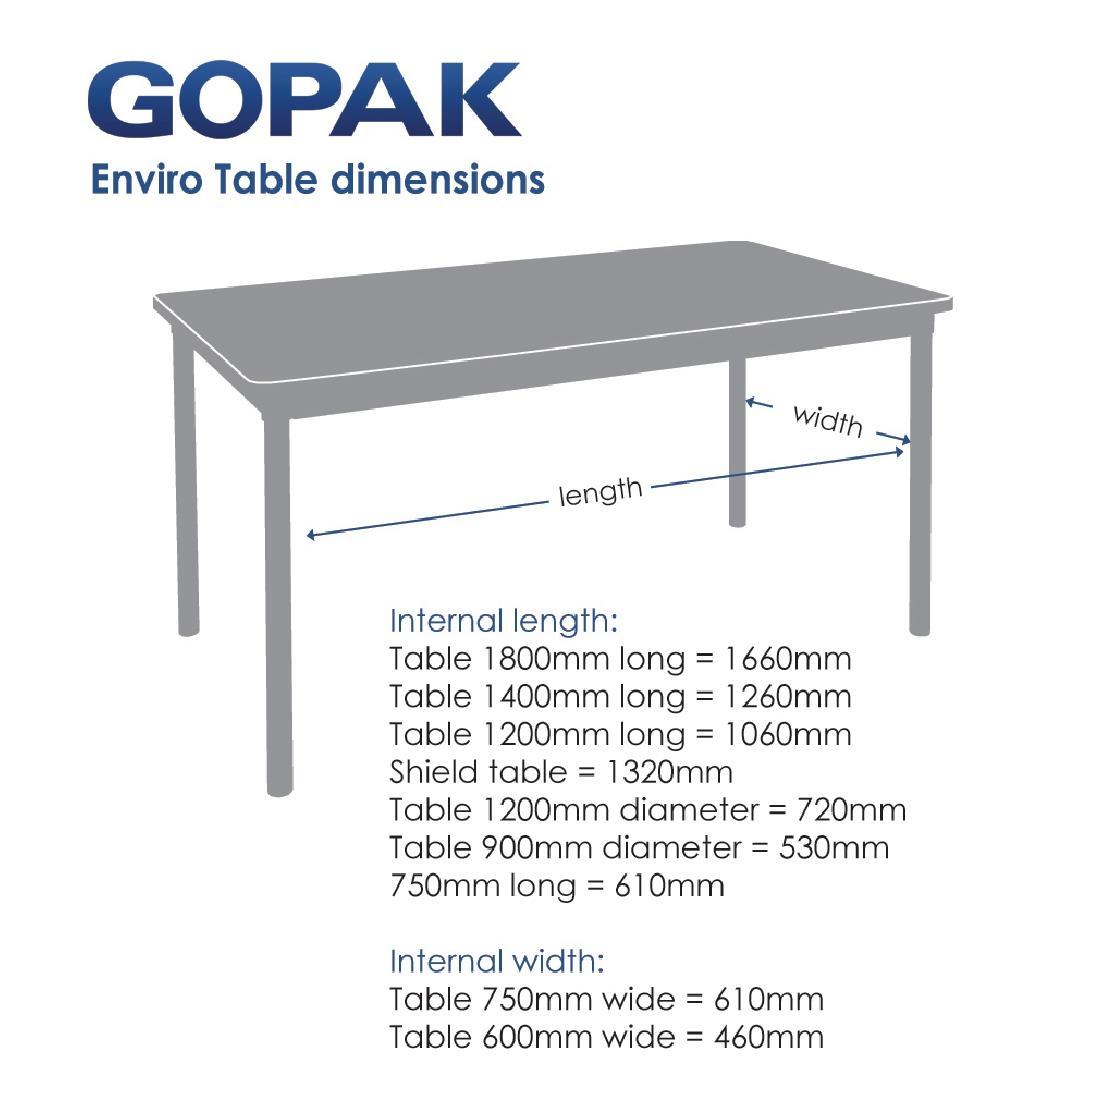 Gopak Enviro Indoor Beech Effect Round Dining Table 900mm - GE965  - 2